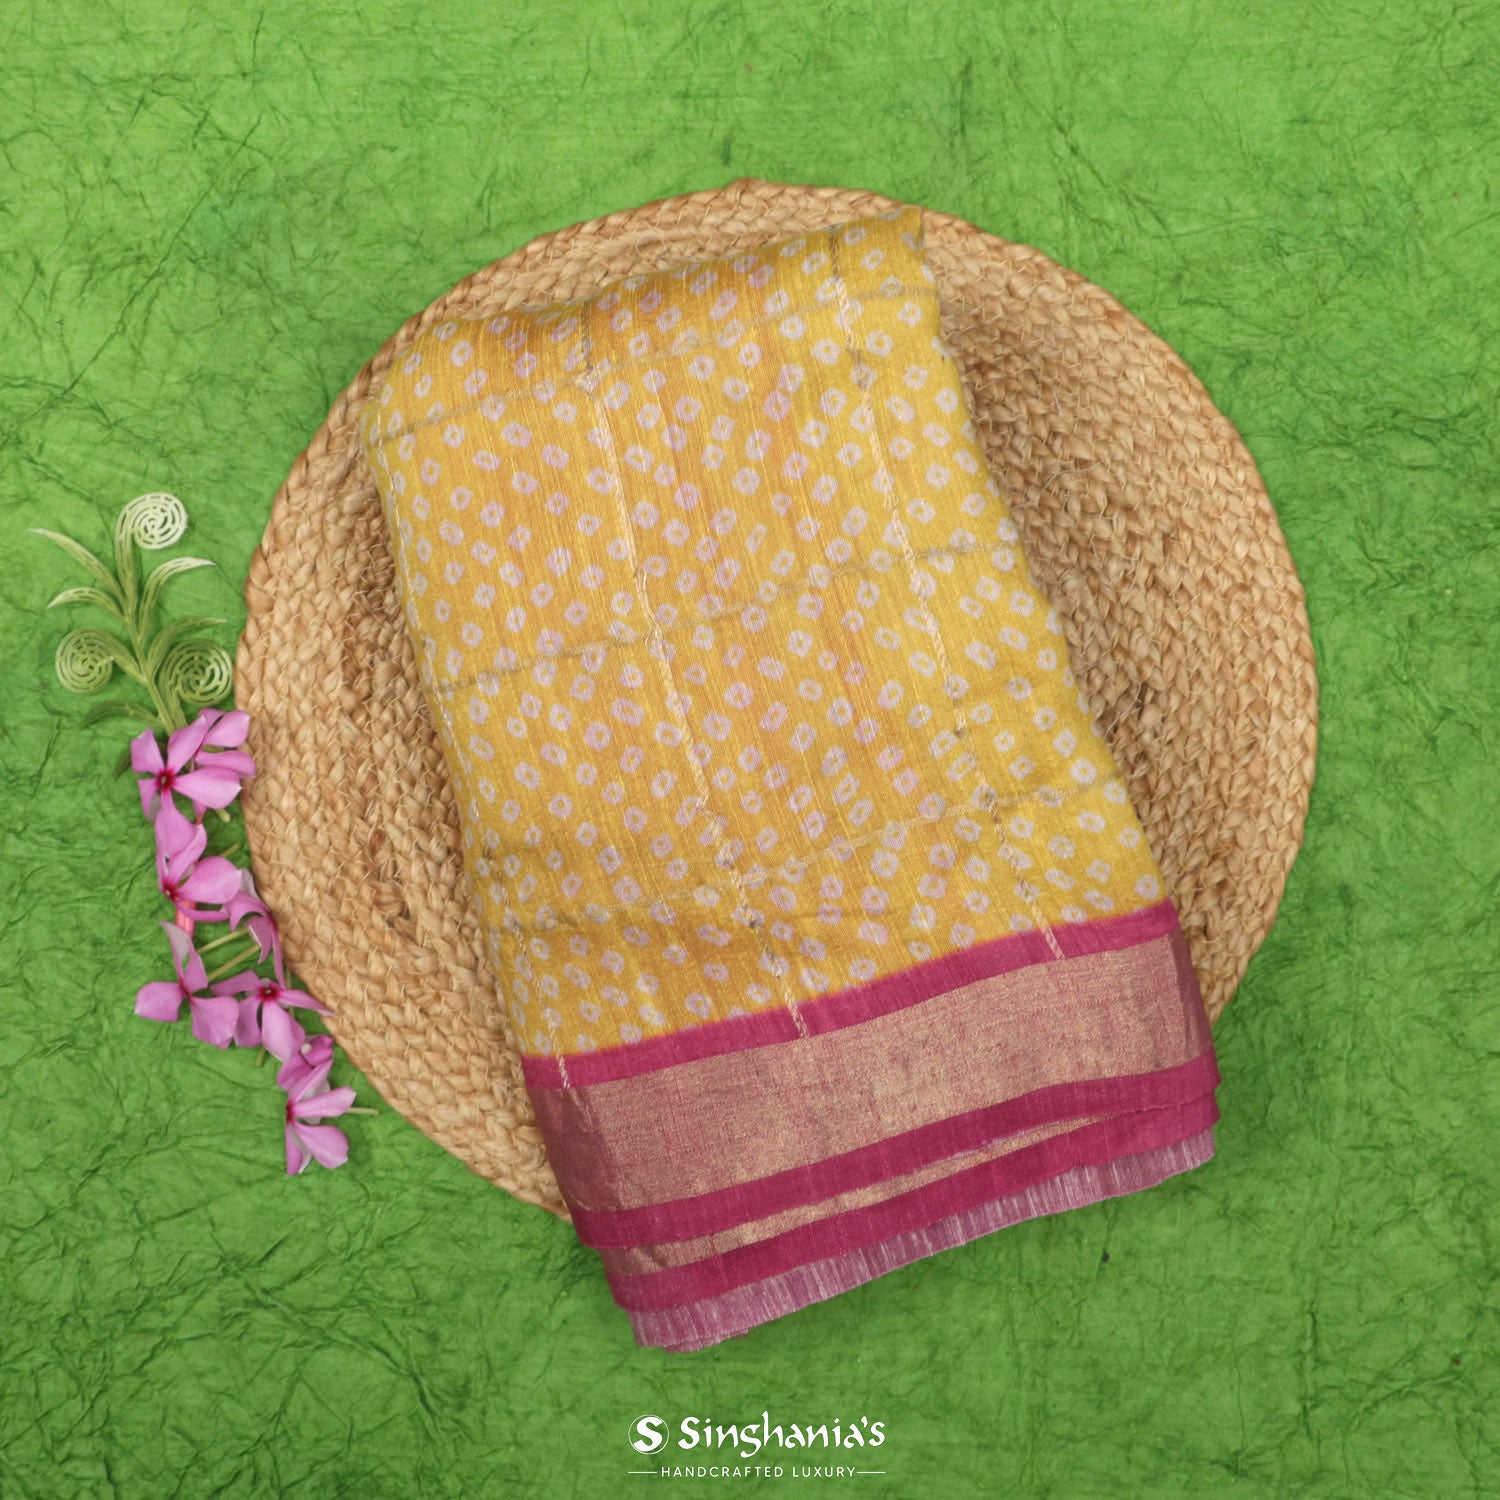 Spanish Yellow Matkaprinted Silk Saree With Bandhani Pattern